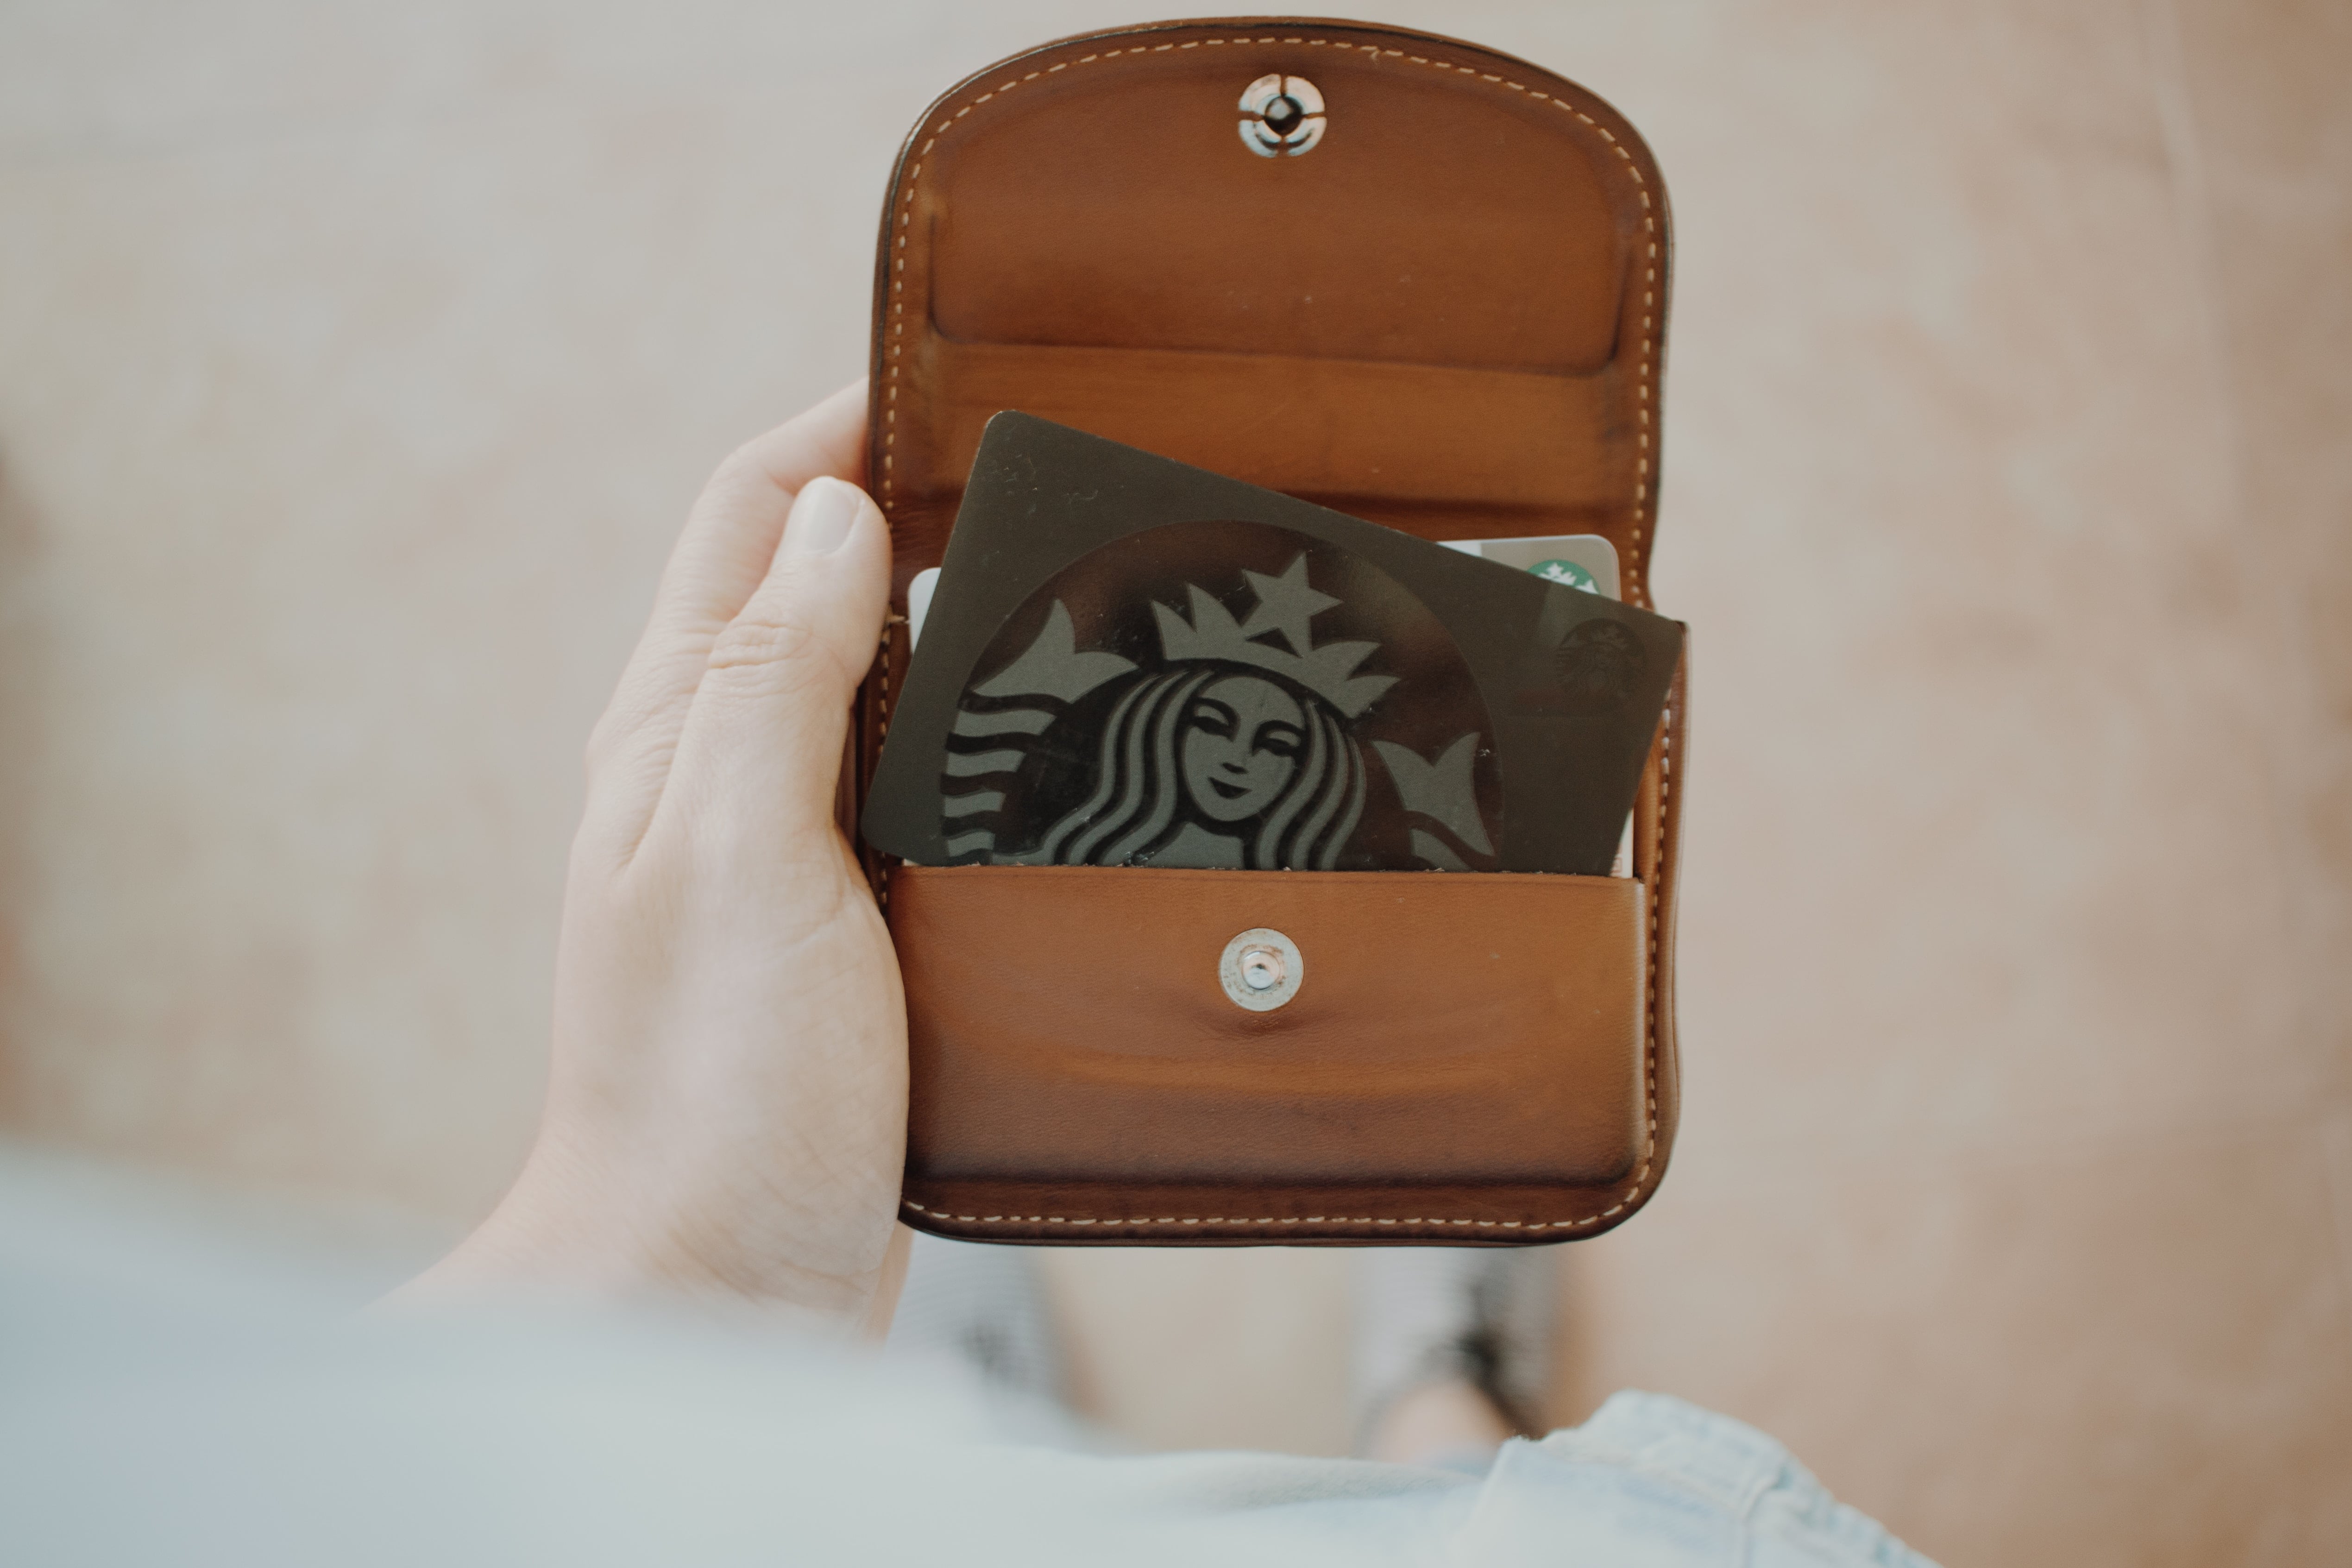 Starbucks loyalty card in a wallet